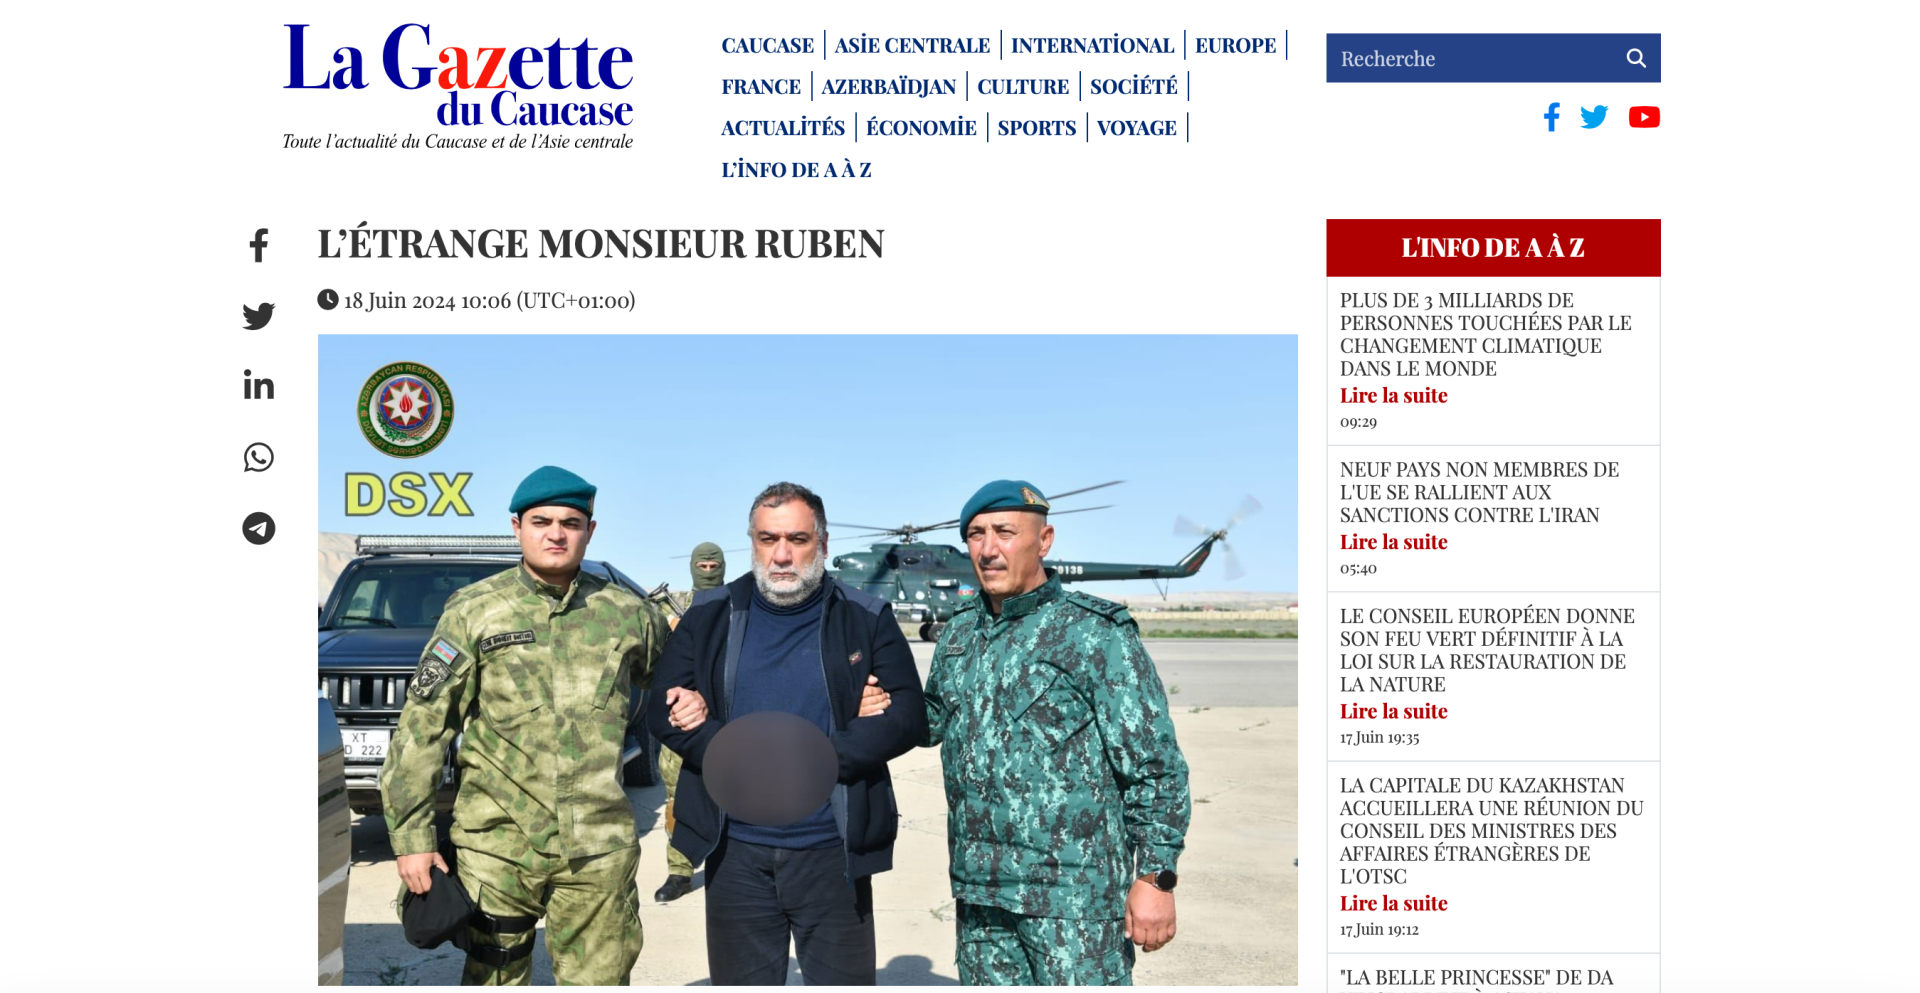 La Gazette du Caucase exposes myth of Ruben Vardanyan - debunking Le Figaro’s pro-Armenian bias